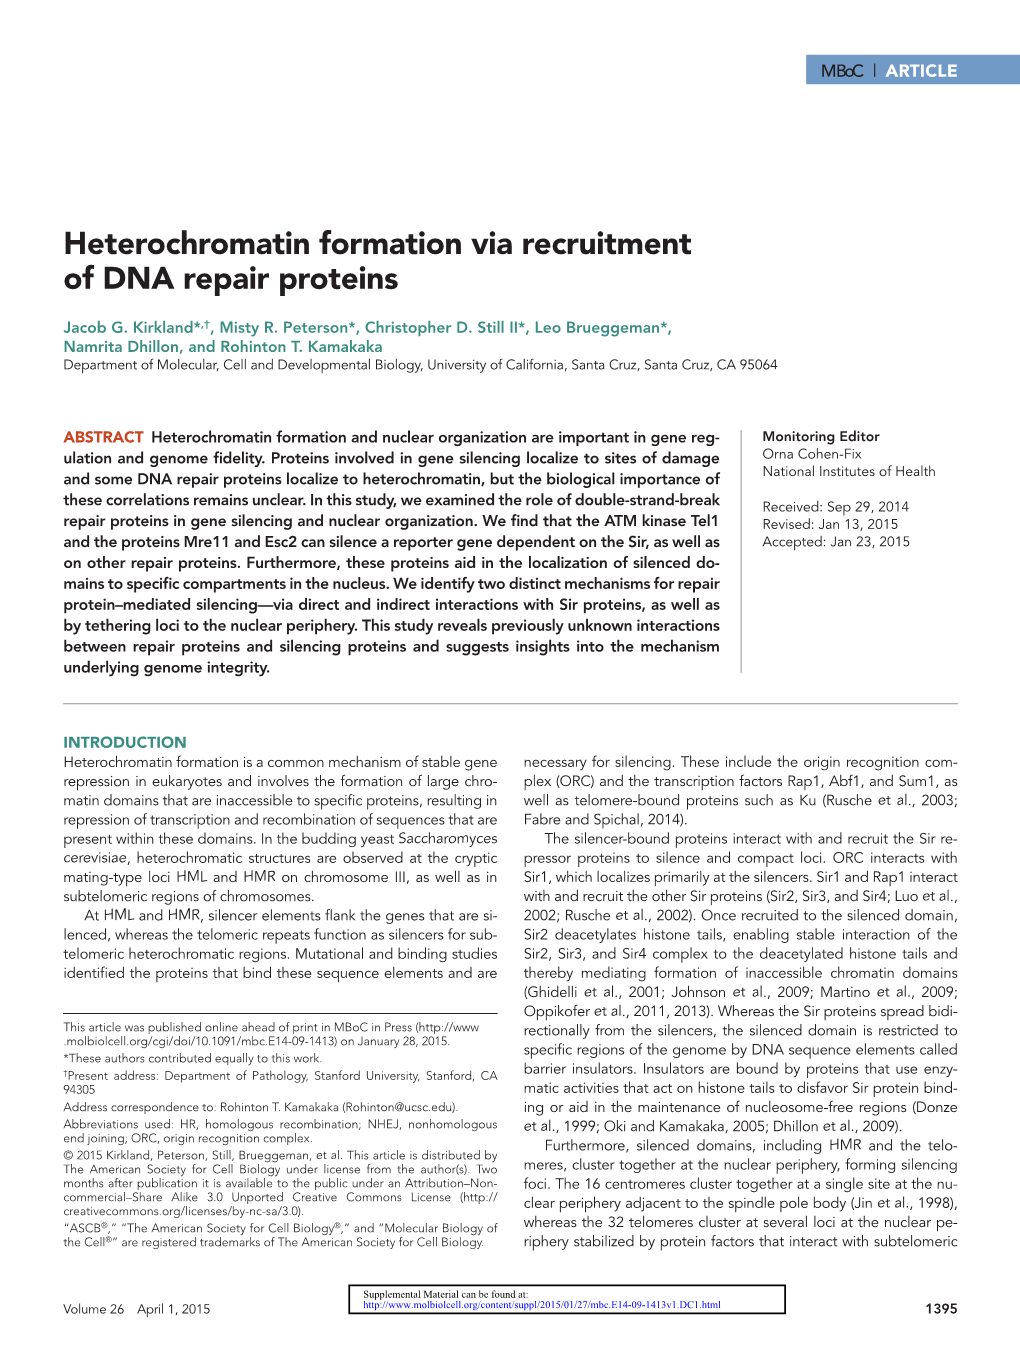 Heterochromatin Formation Via Recruitment of DNA Repair Proteins